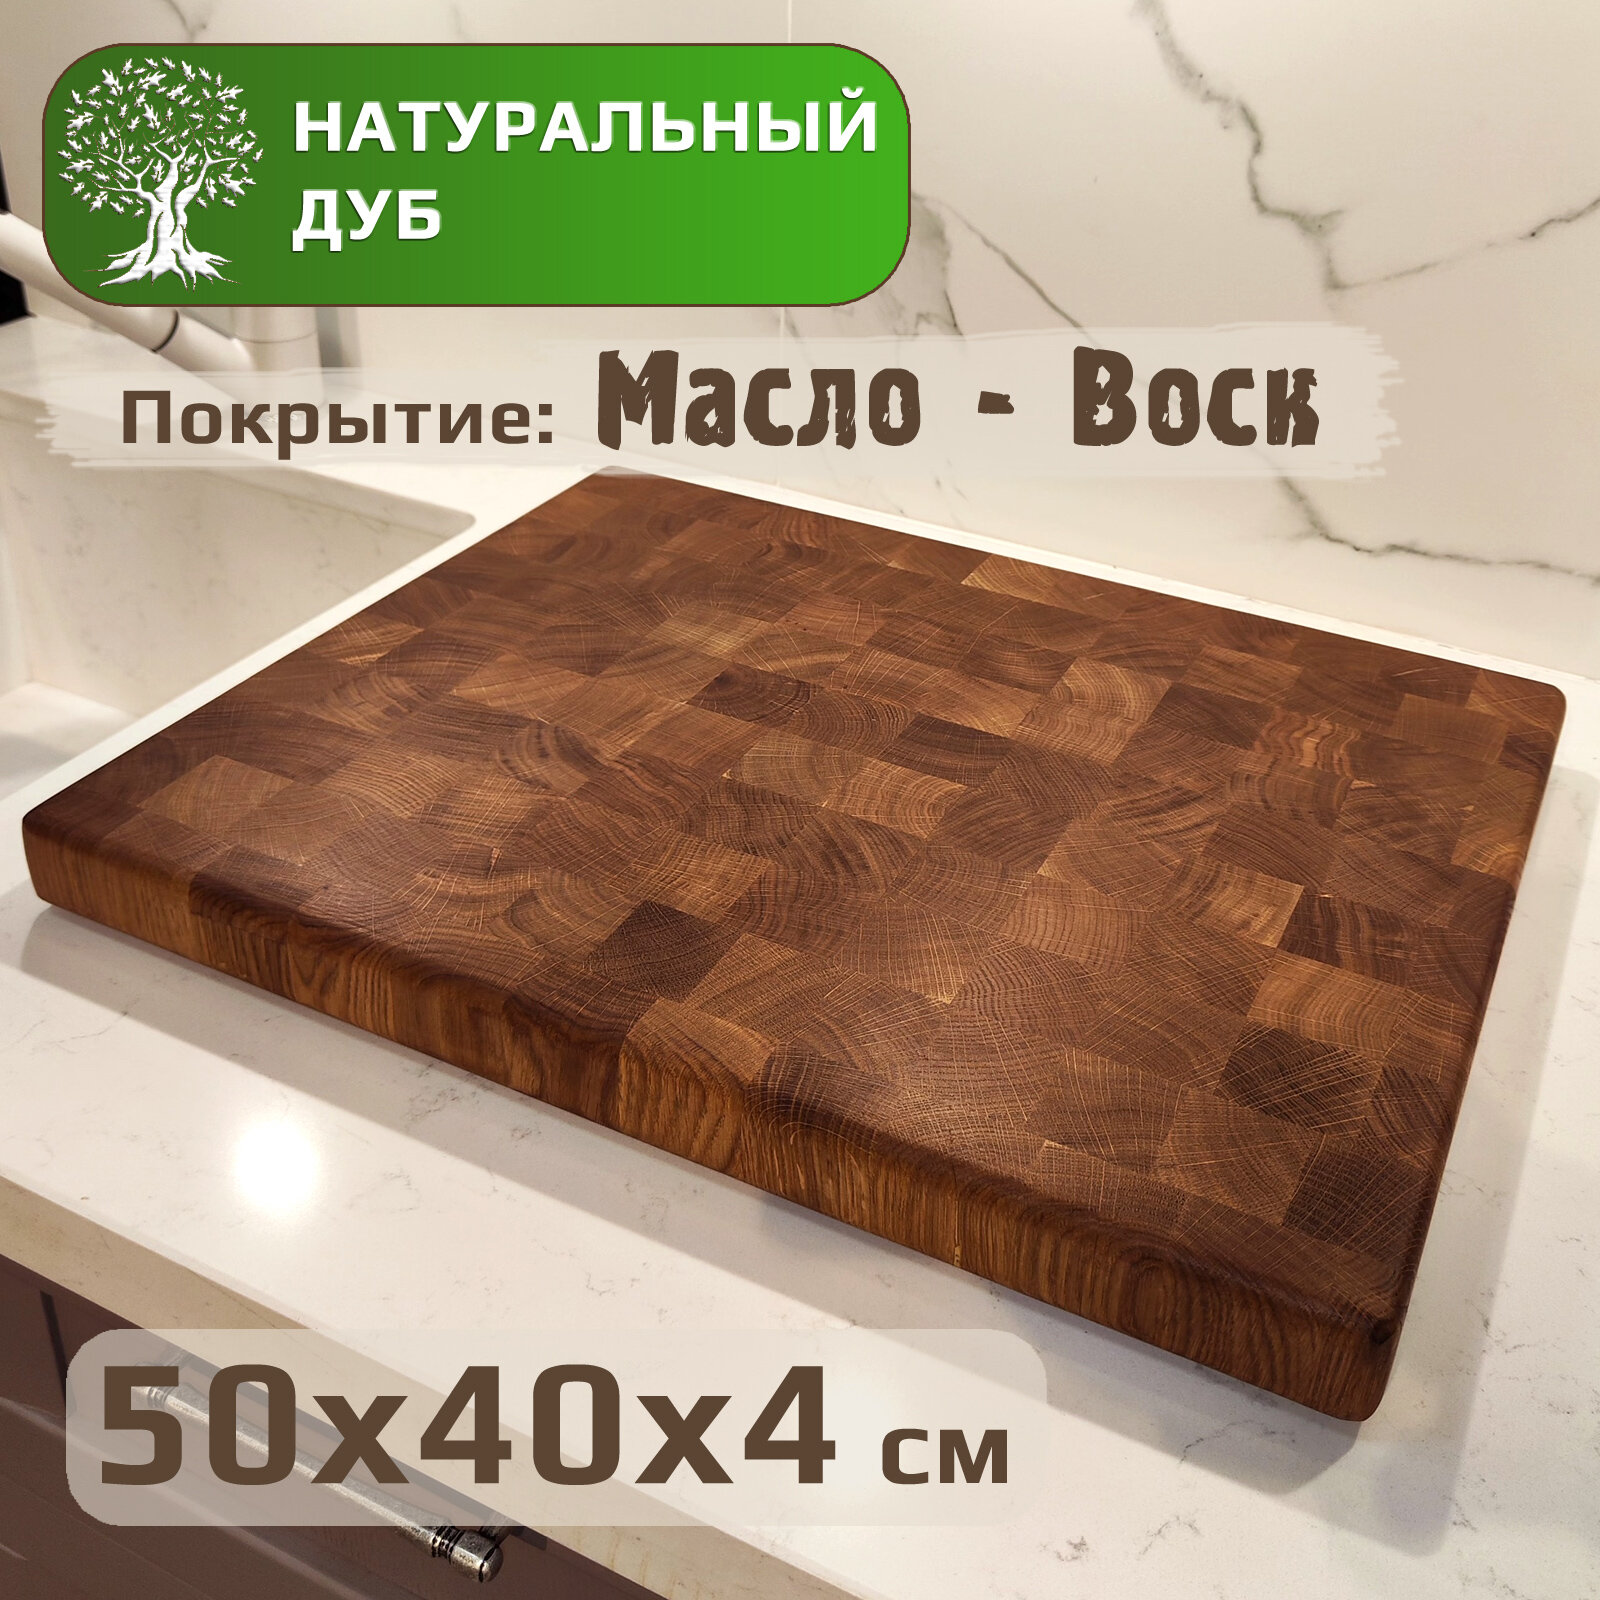 Разделочная доска деревянная Дуб натуральный 40х30х3 см.